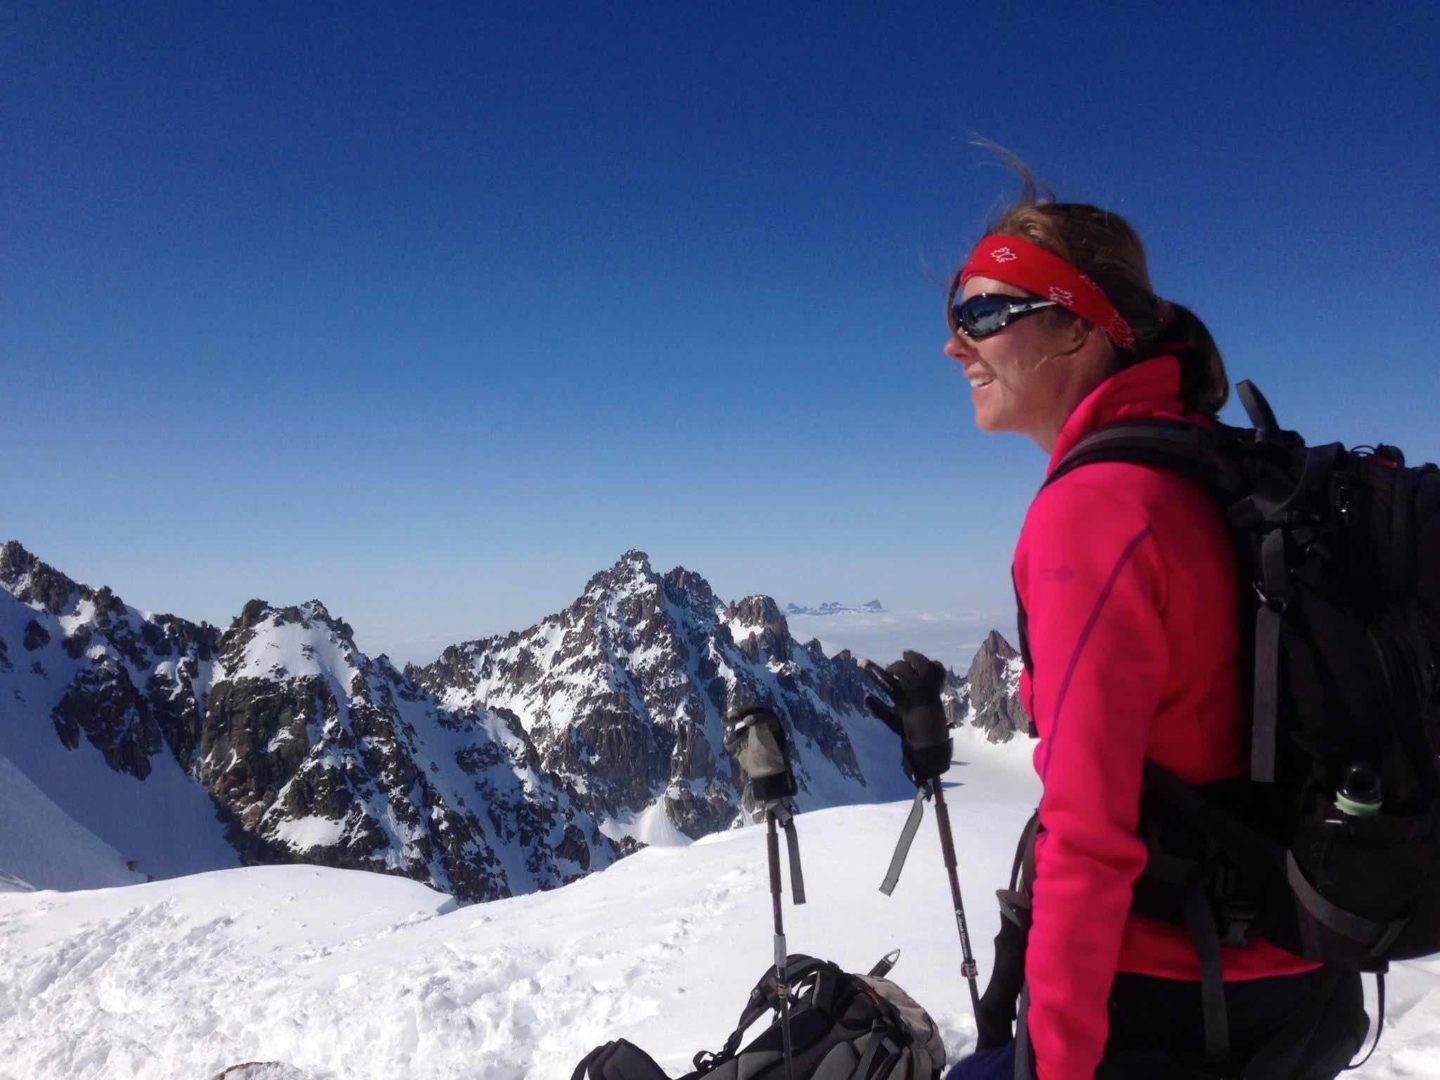 Interview with Francesca Eyre – Ski Business Owner & Endurance Athlete